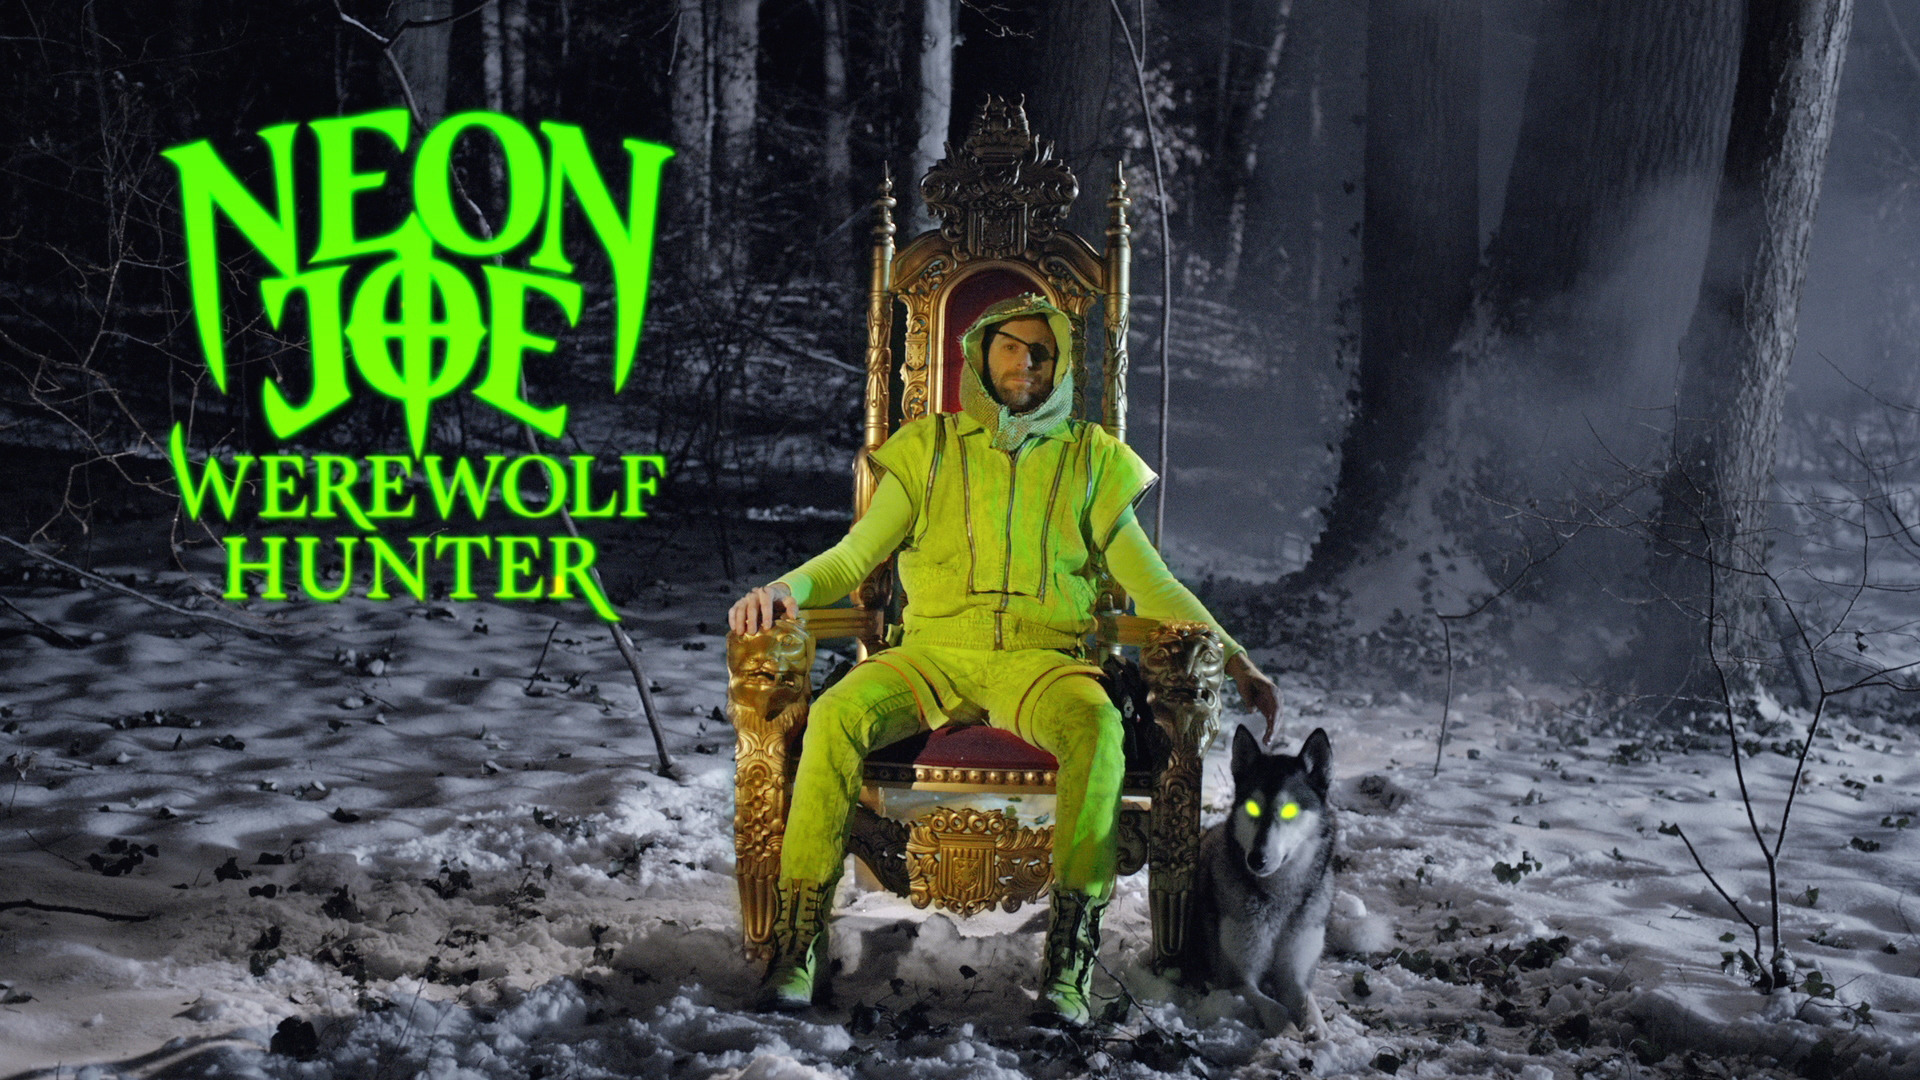 Show Neon Joe, Werewolf Hunter